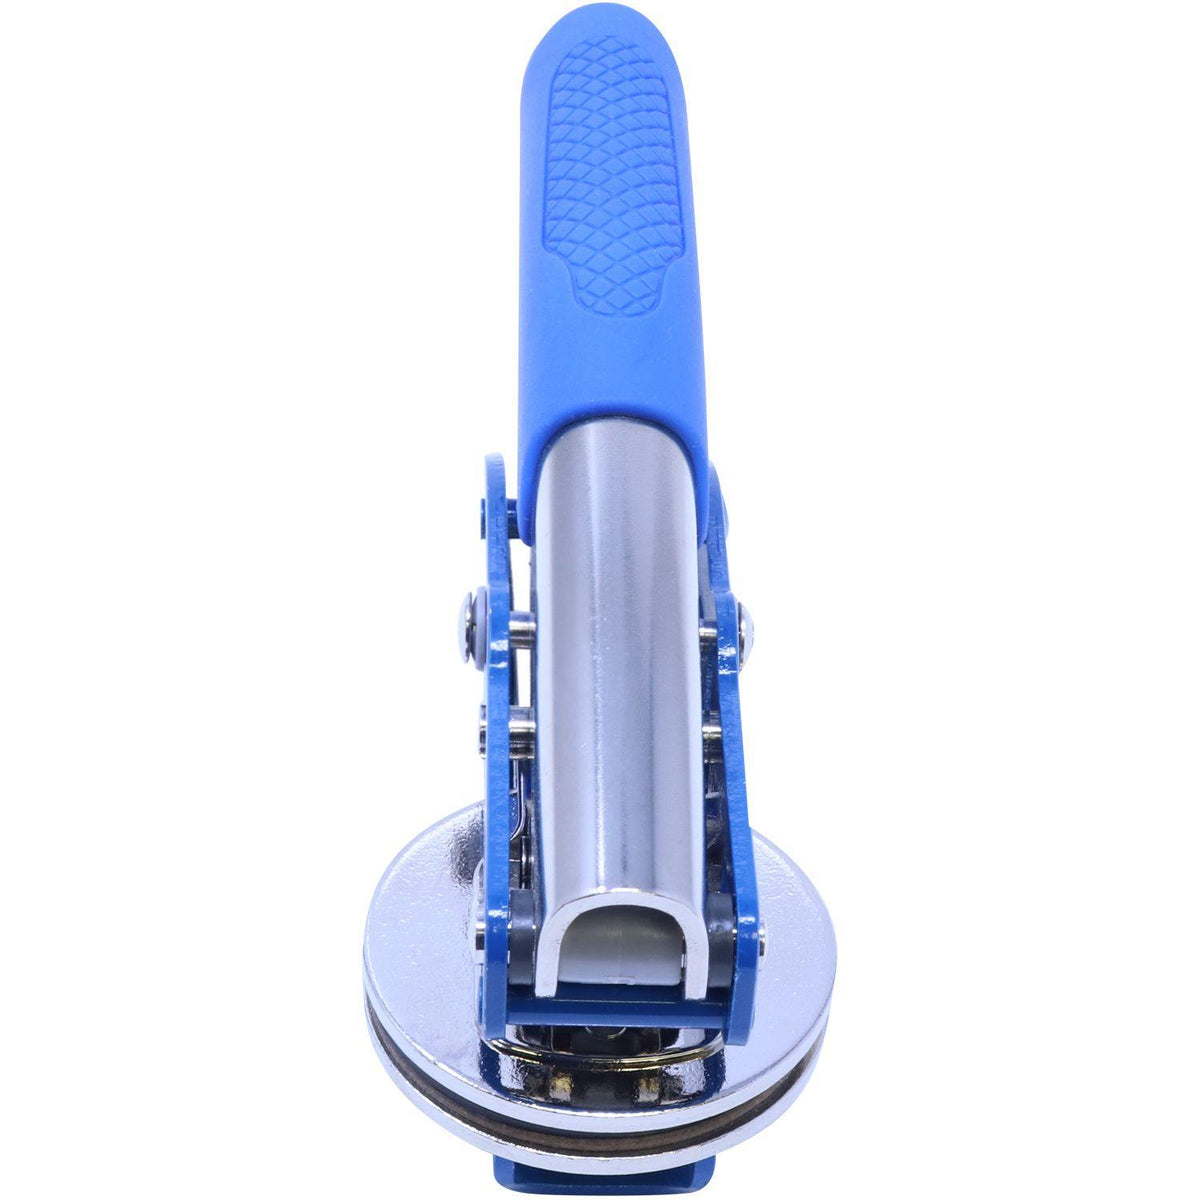 Public Weighmaster Blue Soft Seal Handheld Embosser - Engineer Seal Stamps - Embosser Type_Handheld, Embosser Type_Soft Seal, Type of Use_Professional